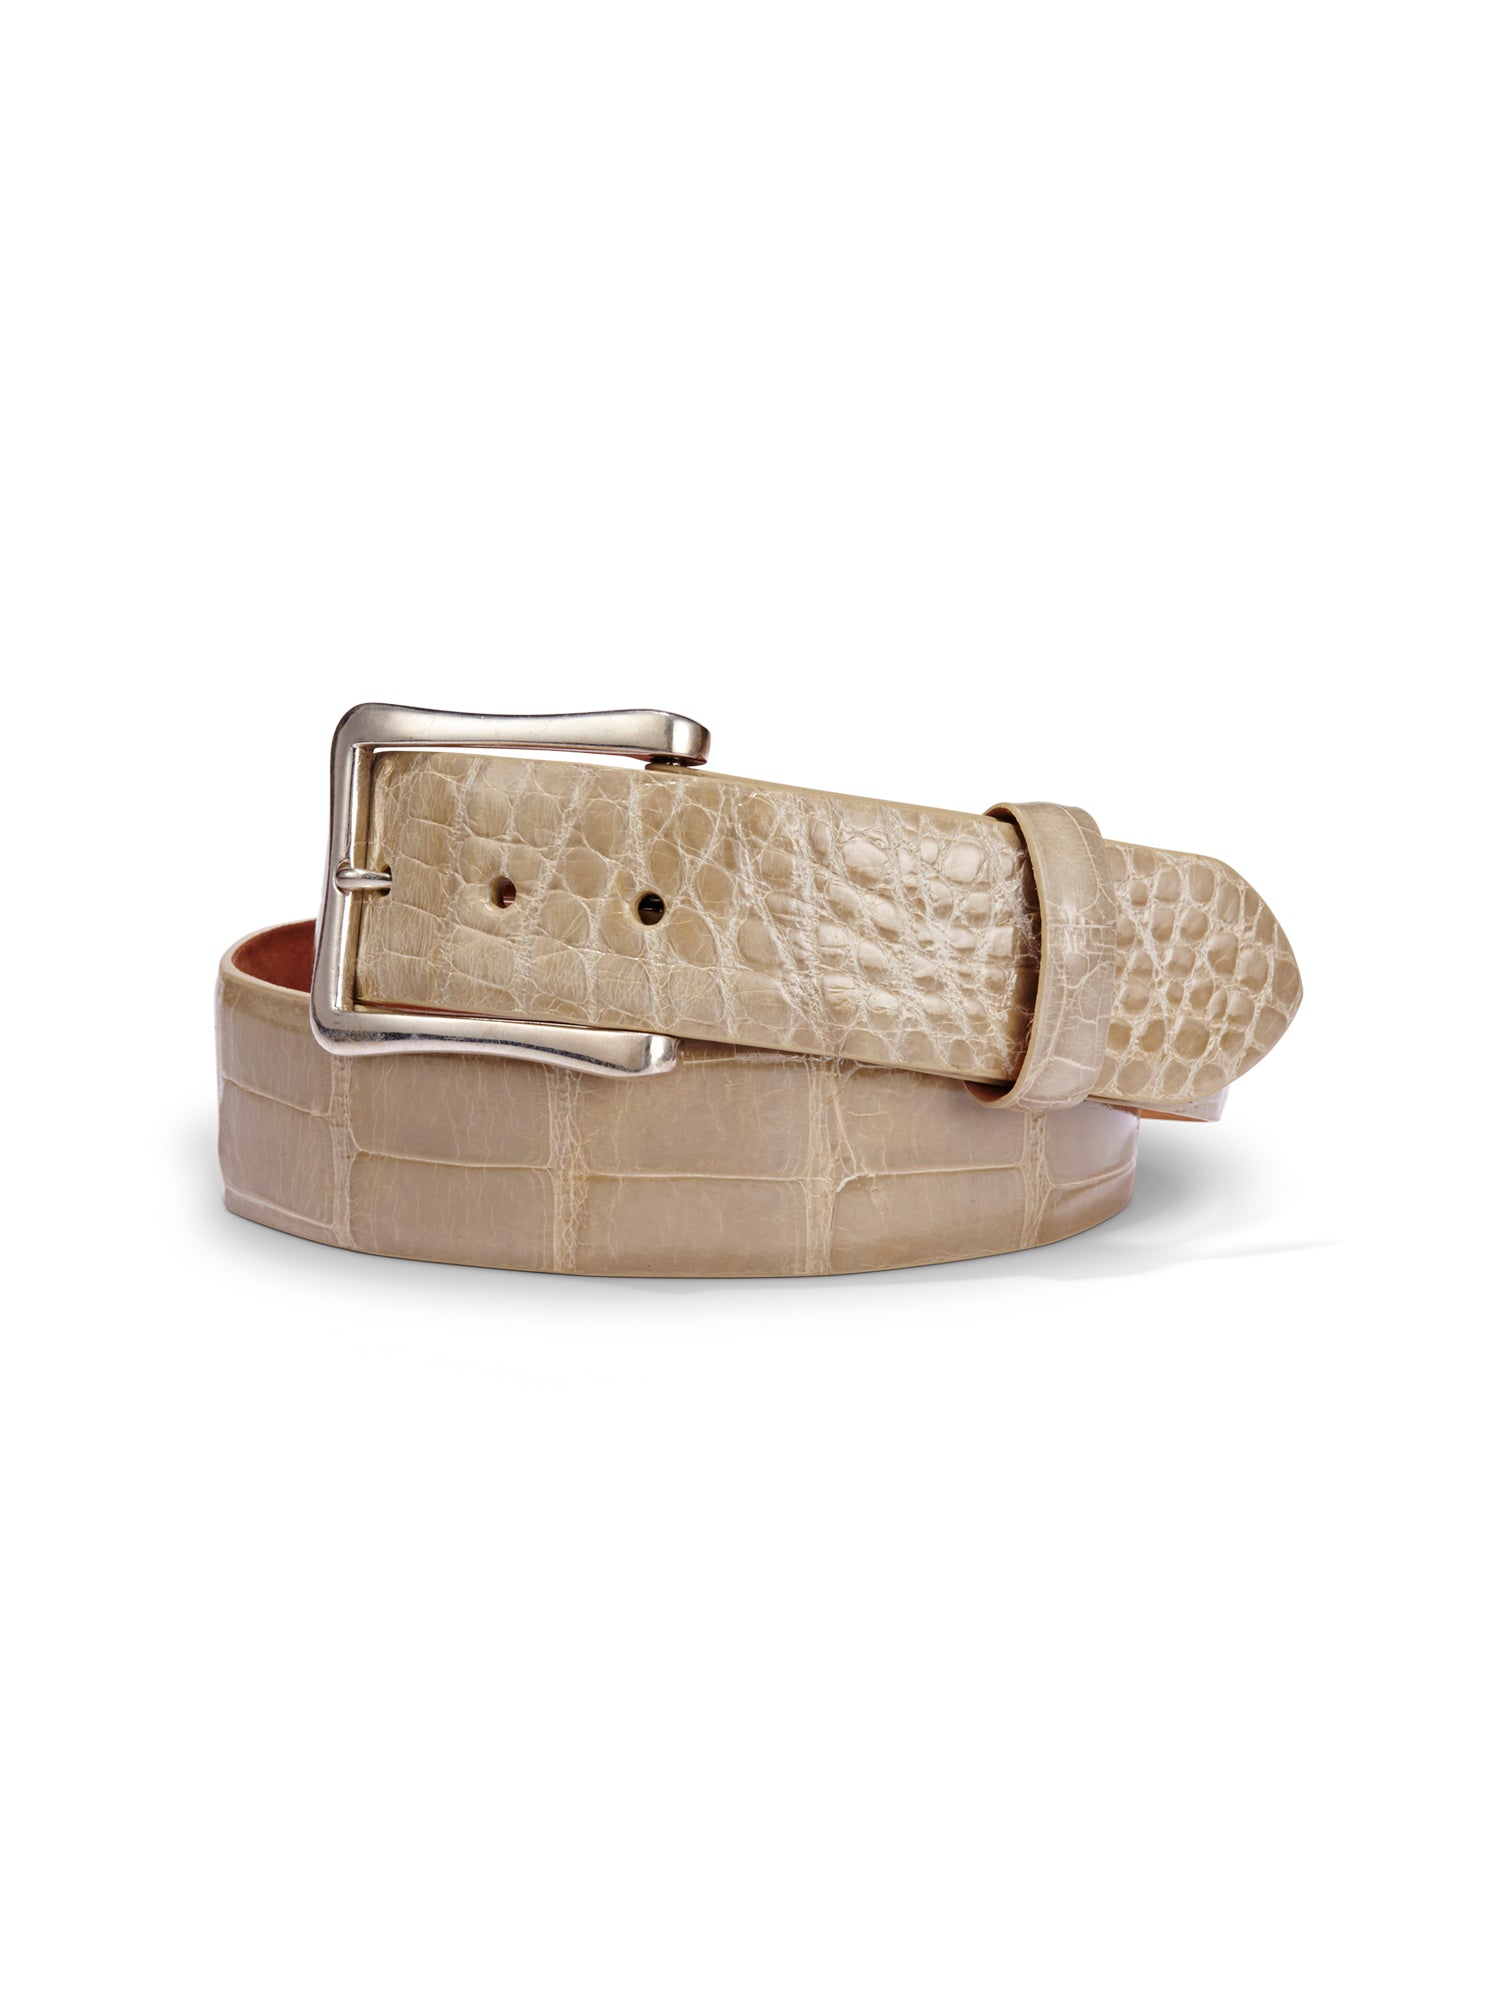 Purple Genuine Alligator Crocodile Skin Belt size 37 for Hermès LV